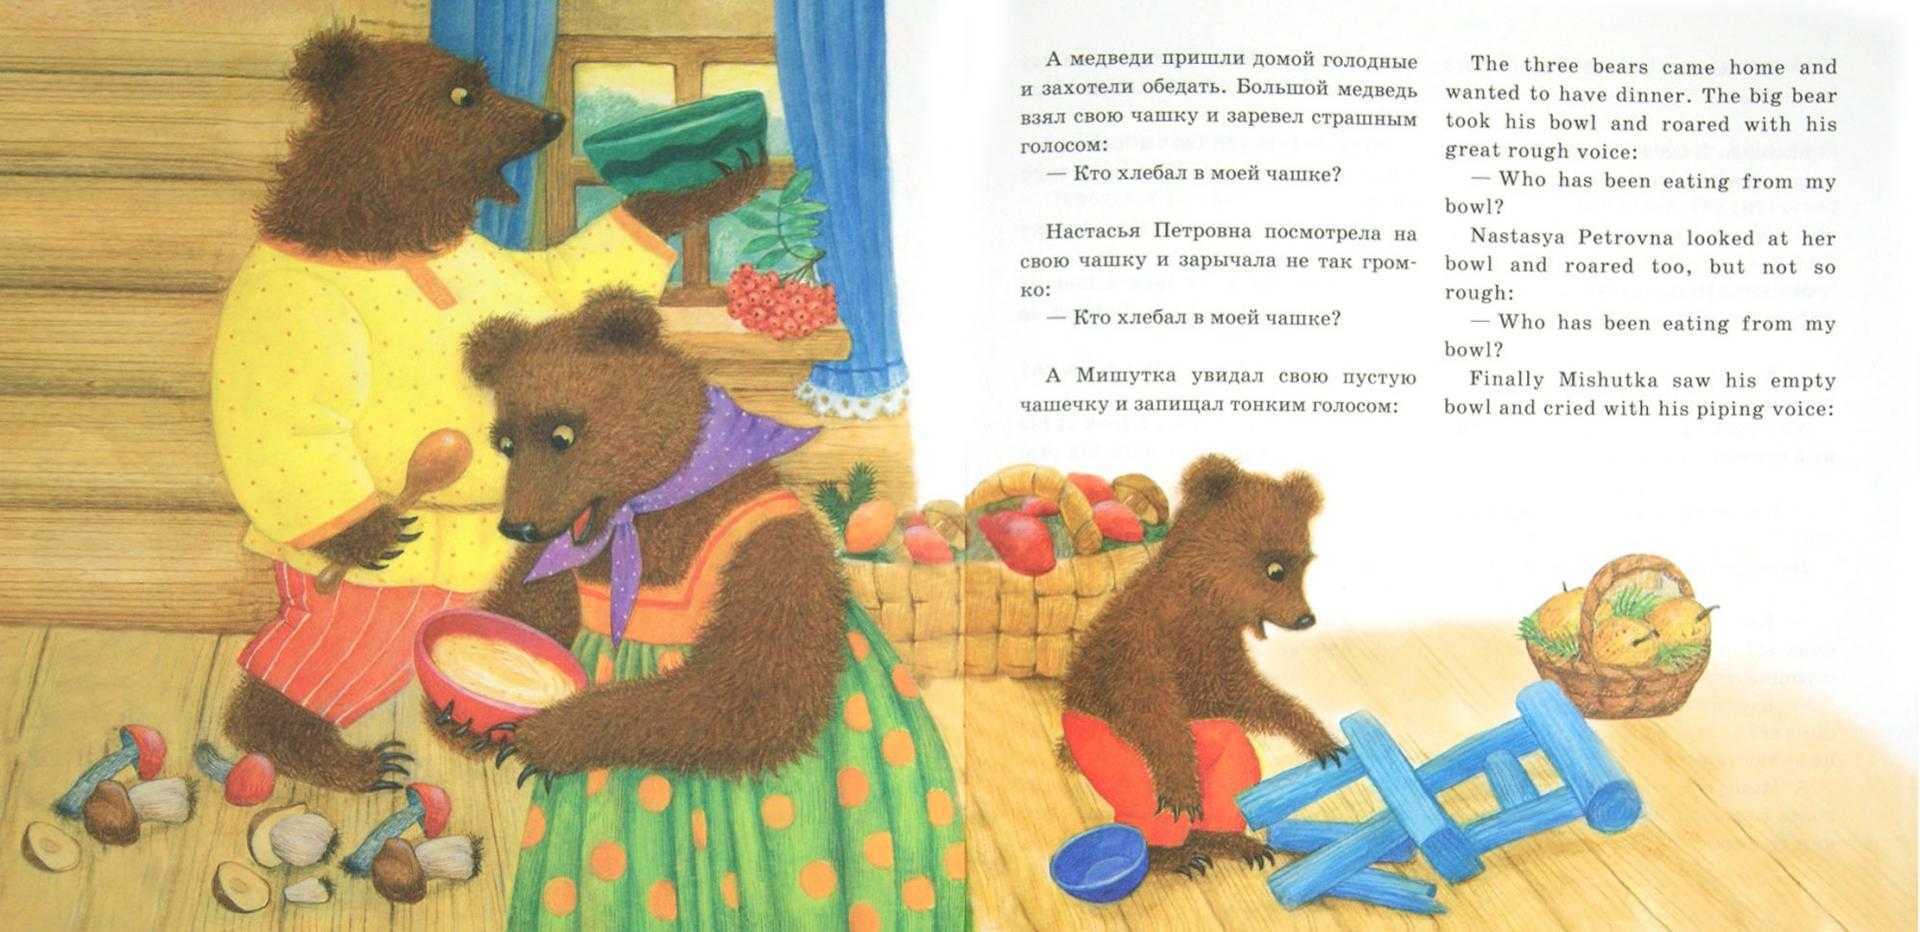 Сказка три медведя толстой. Чтение сказки три медведя. Прочитать сказку три медведя. Лев Николаевич толстой три медведя. Иллюстрация к сказке 3 медведя.